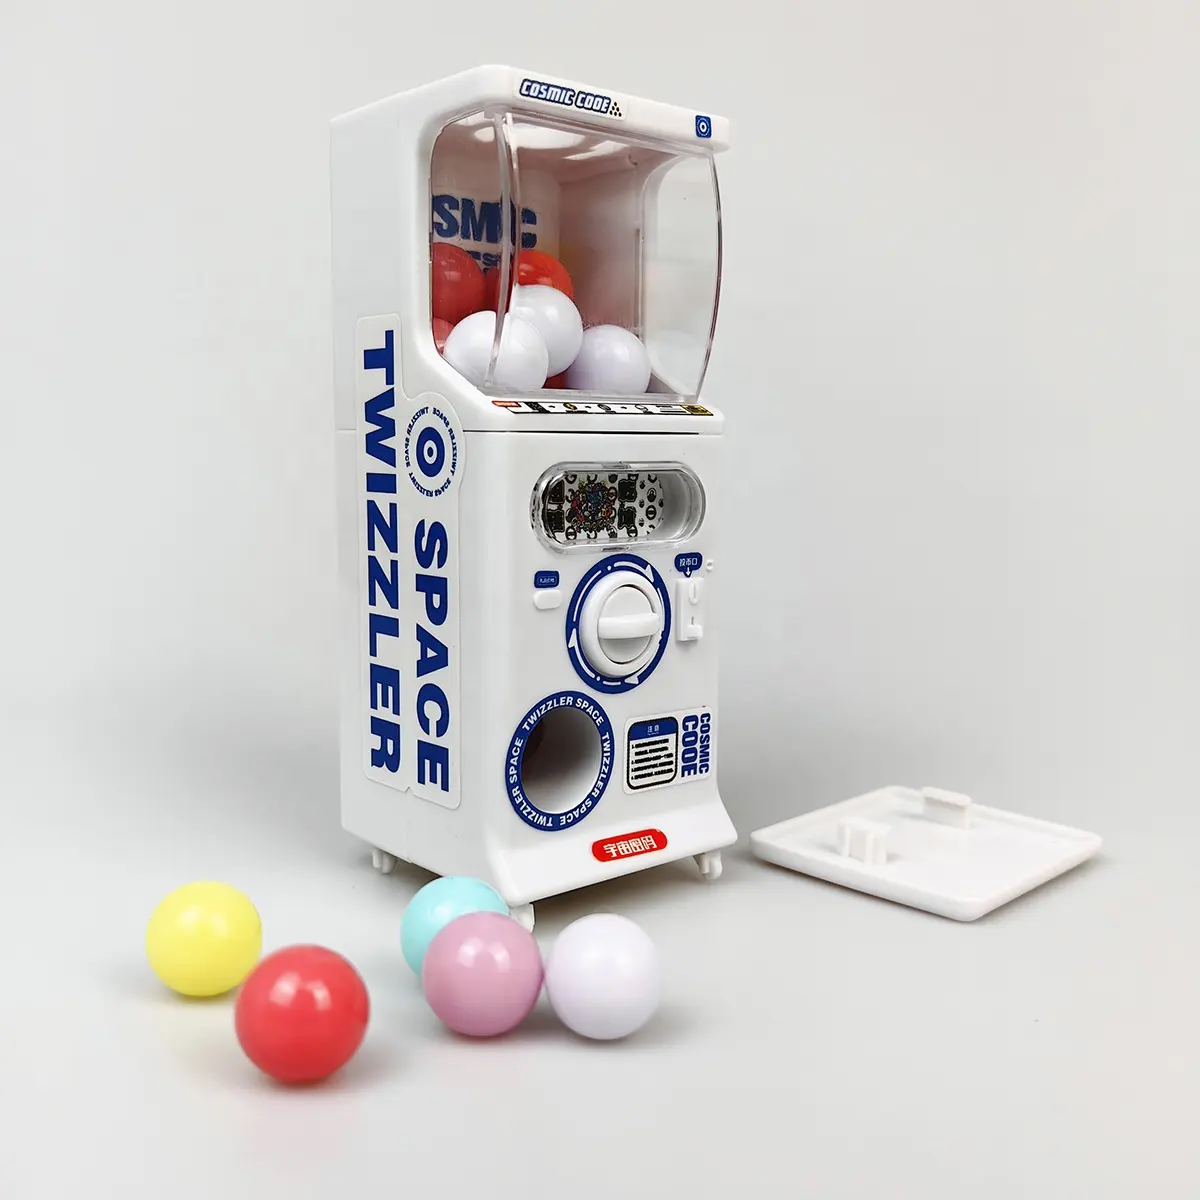 Gashapon Kapsel spielzeug Verkaufs automat Spielzeug Kapsel spielzeug Gashapon Kapsel automat Modell Ball Vending